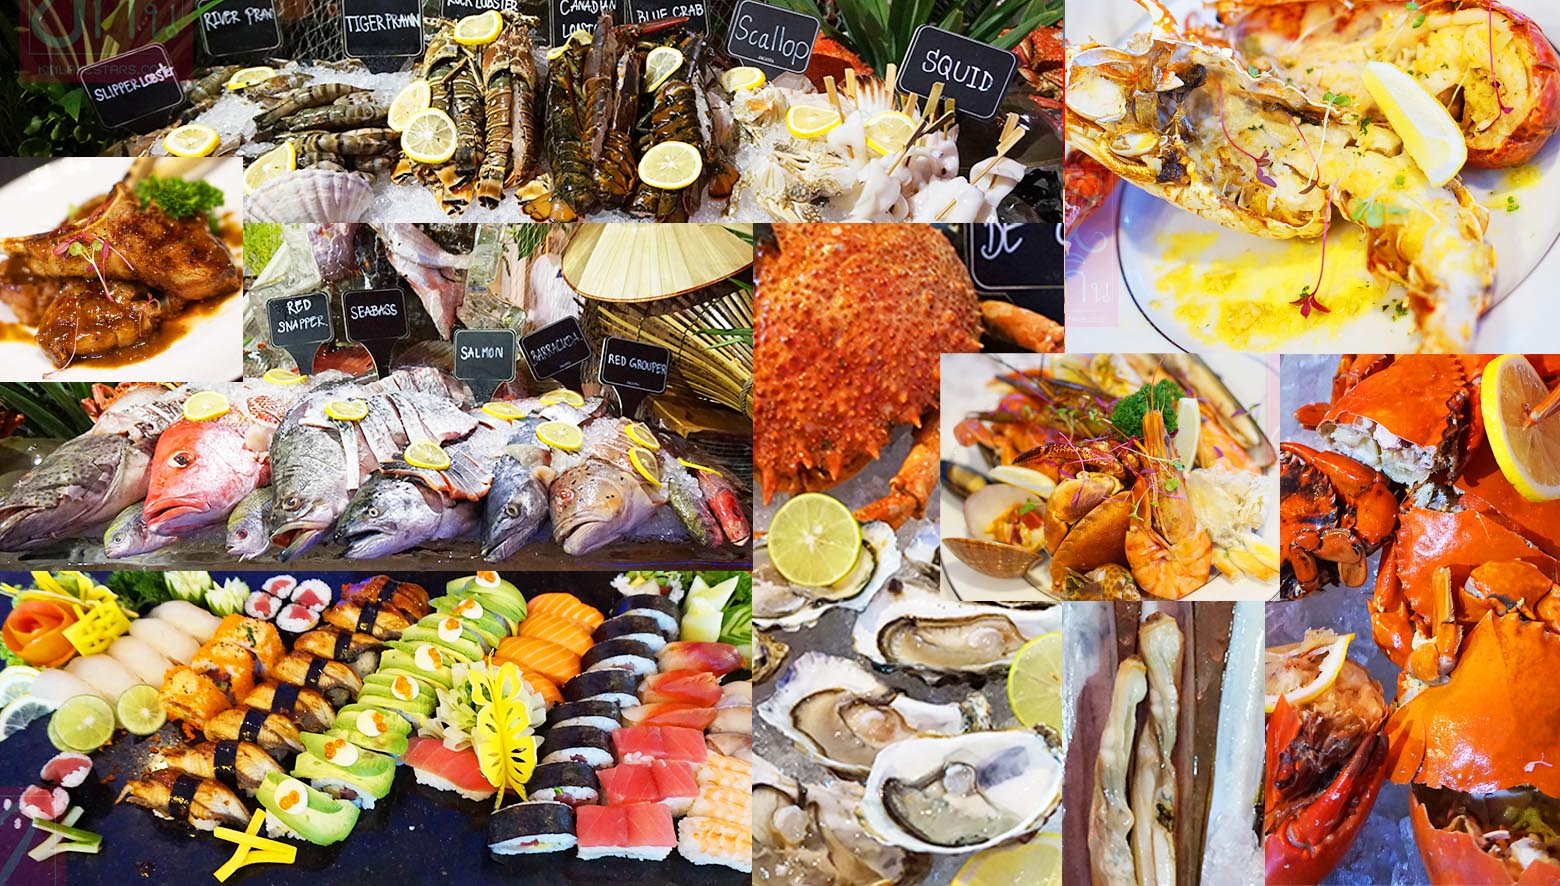 voila_buffet_seafood-market_review